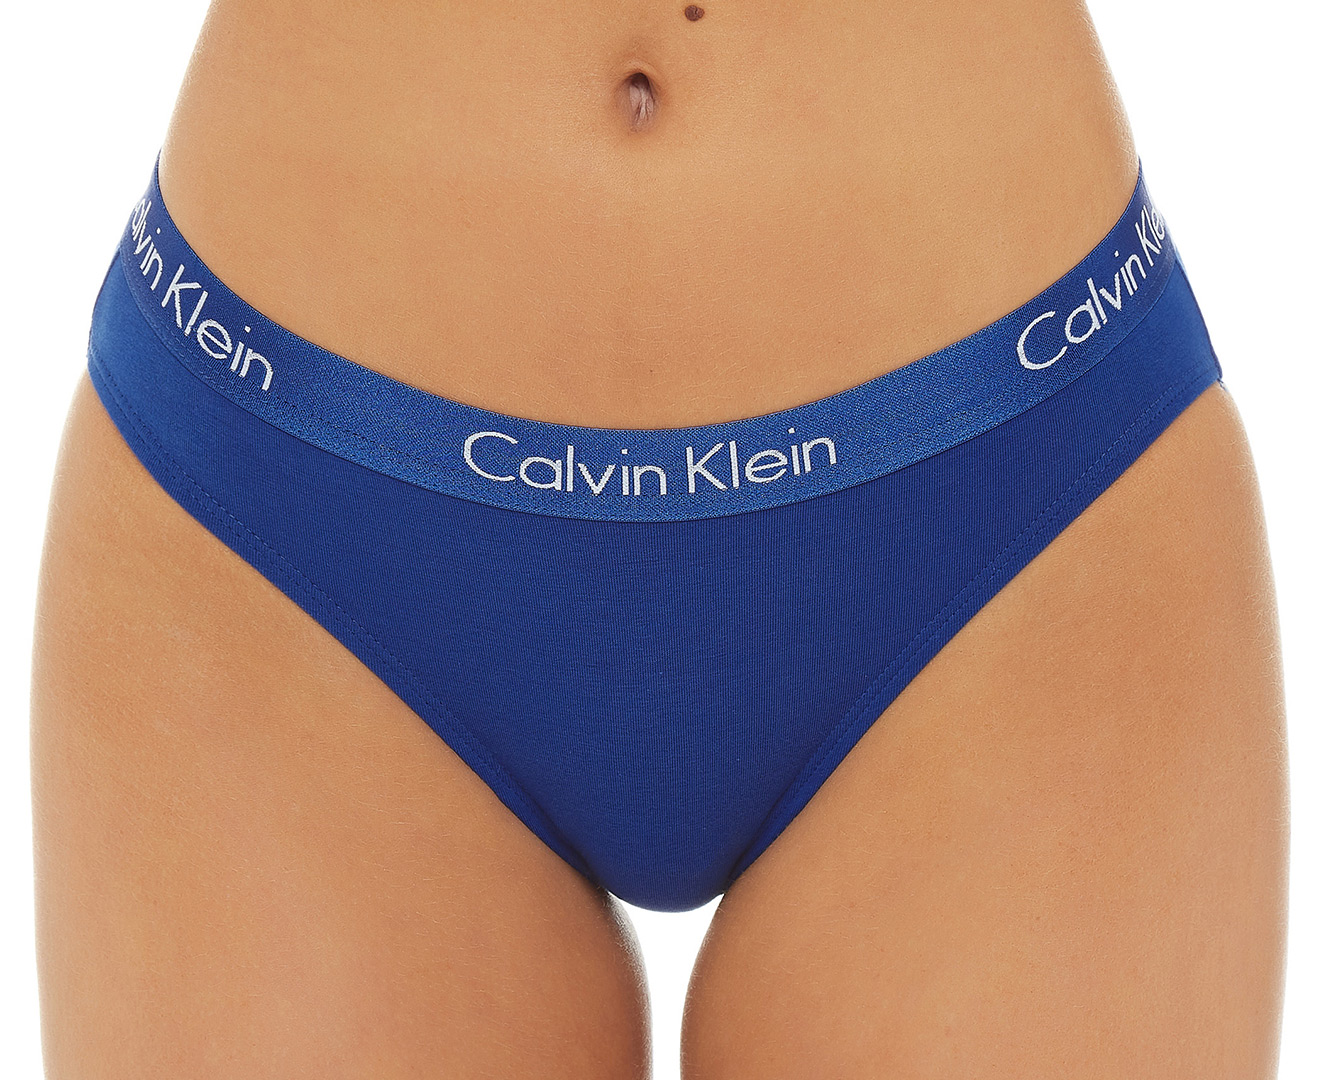 Calvin Klein Women's Motive Cotton Bikini Briefs 3-Pack - Royalty/Blue  Stripe/Grey Heather